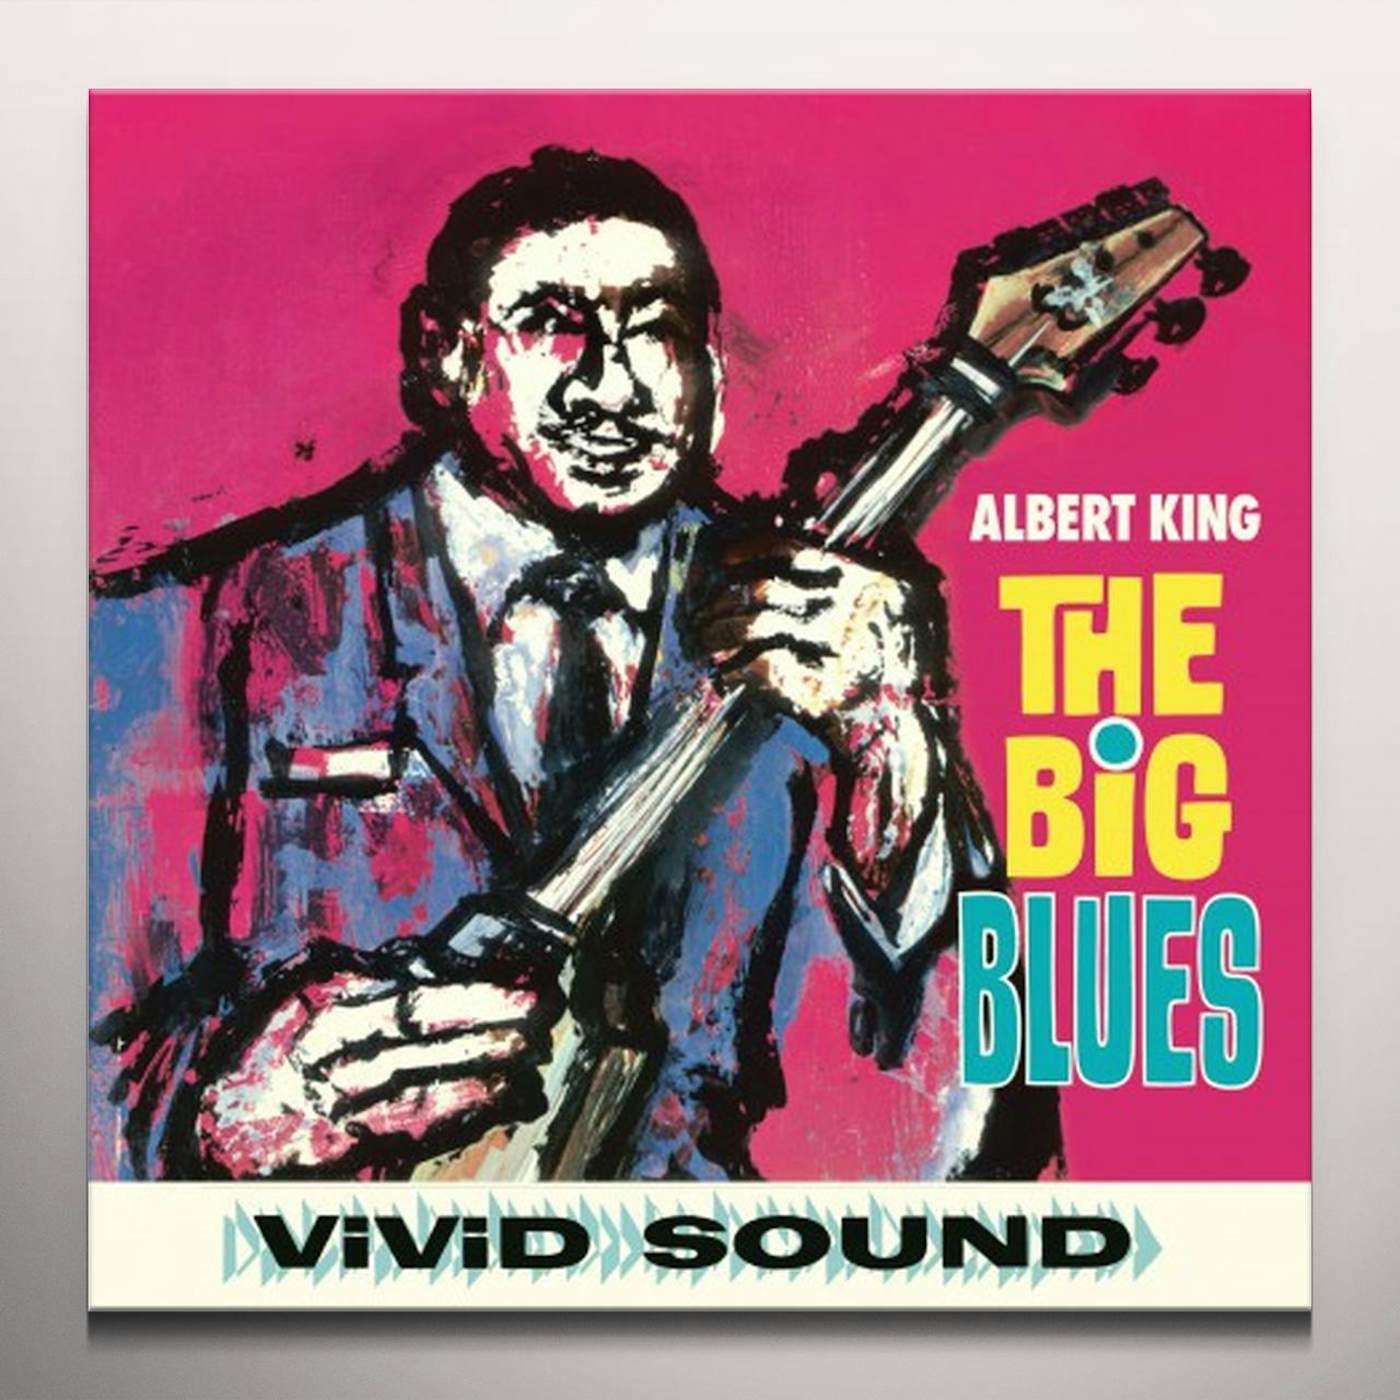 Albert King BIG BLUES  (BONUS TRACKS) Vinyl Record - Blue Vinyl, Colored Vinyl, Limited Edition, 180 Gram Pressing